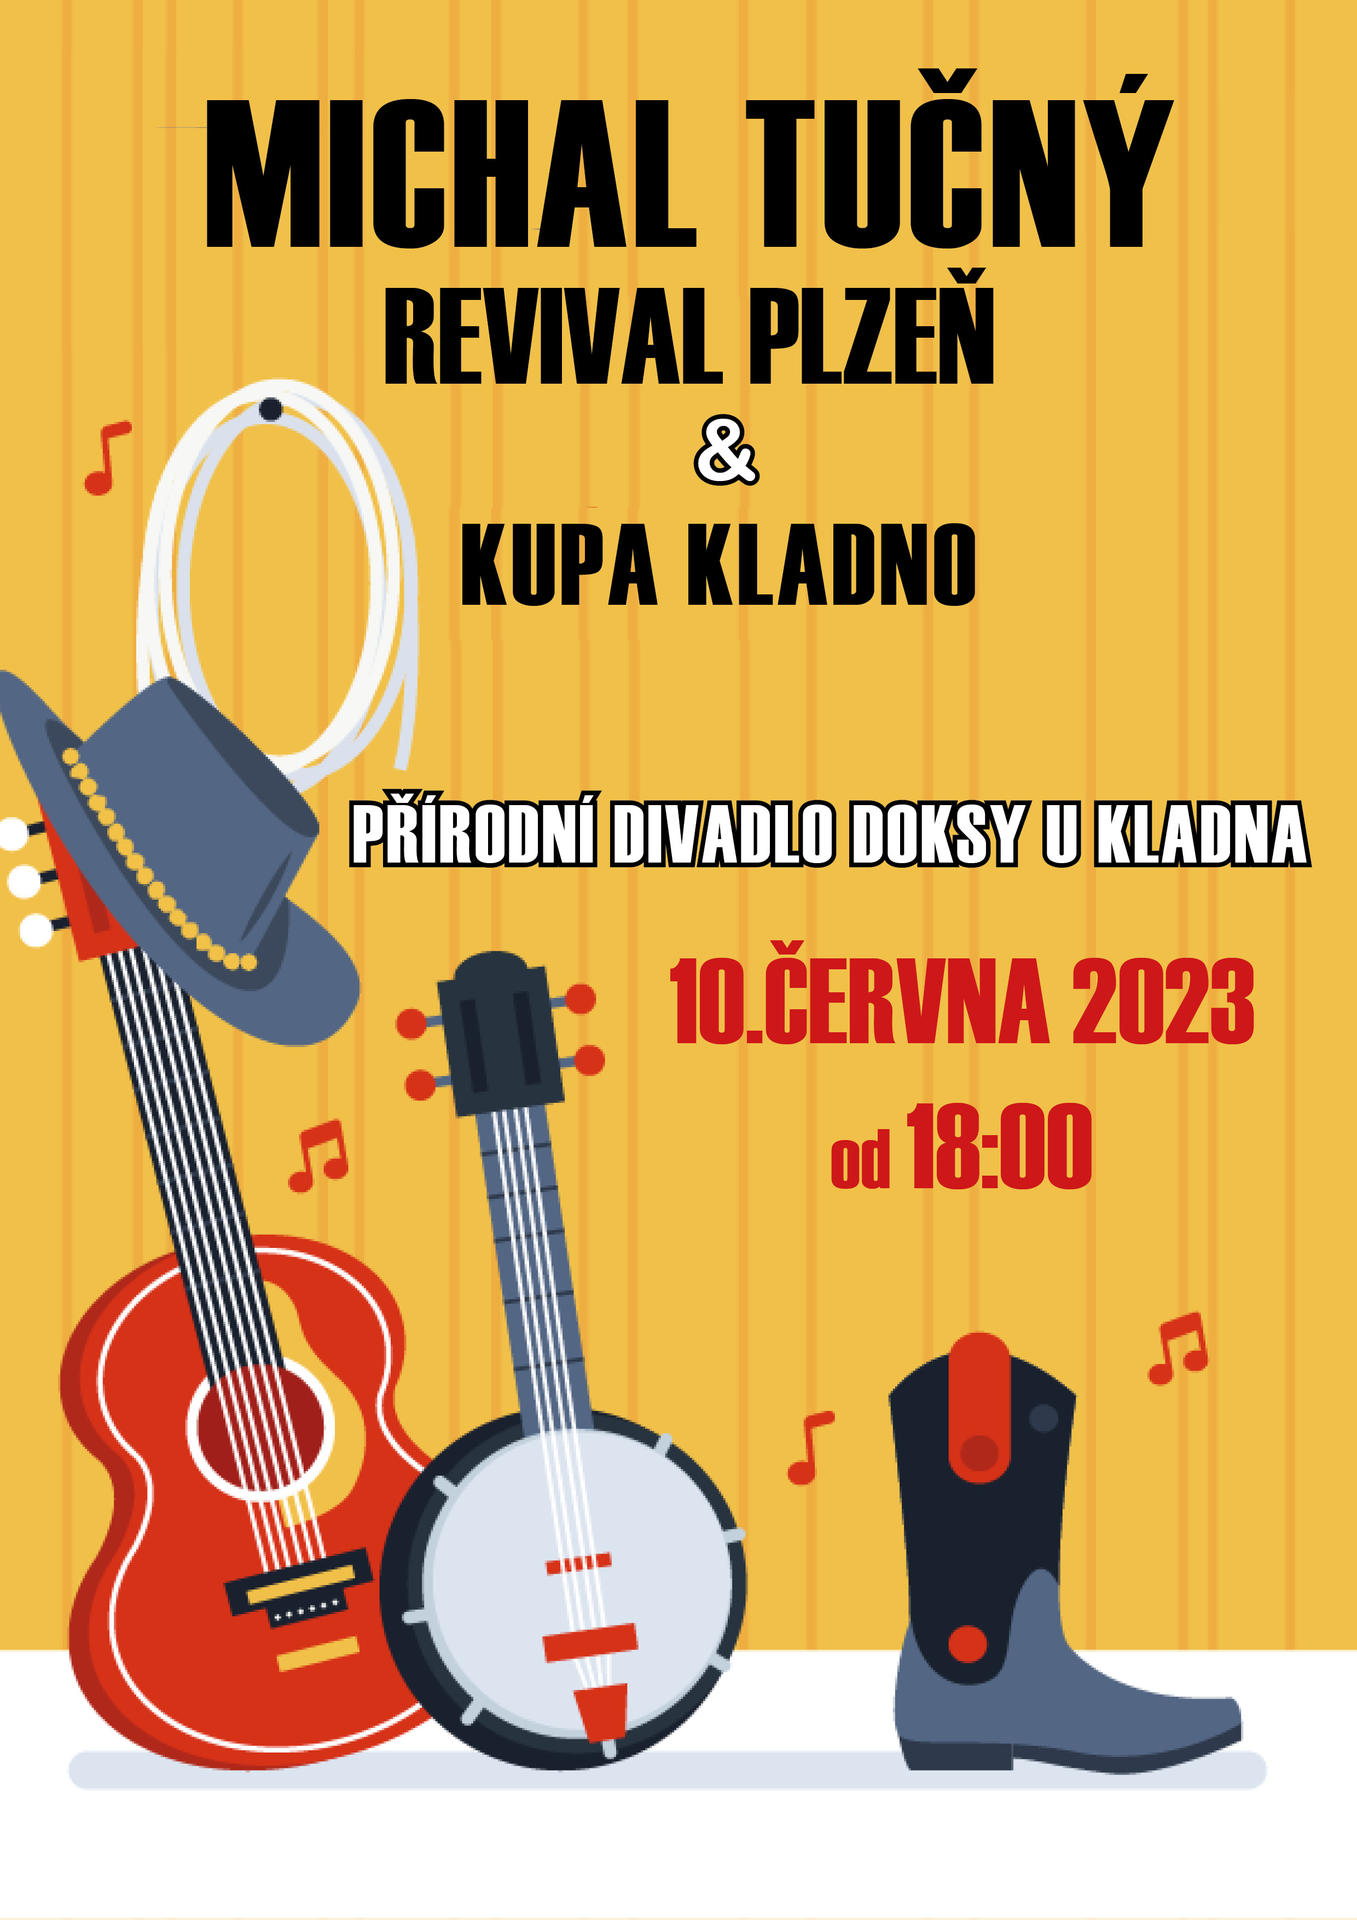 Michal Tučný Revival Plzeň & Kupa Kladno